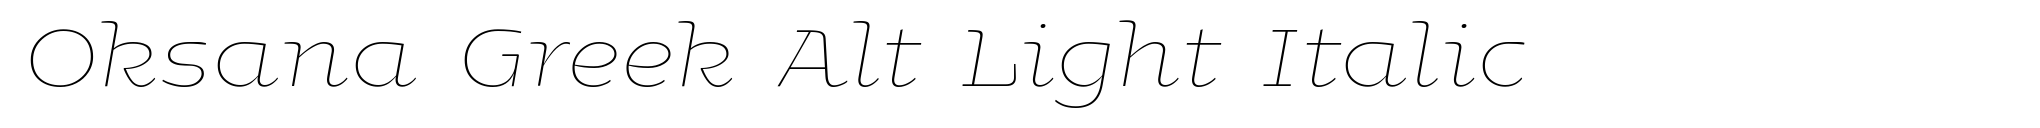 Oksana Greek Alt Light Italic image